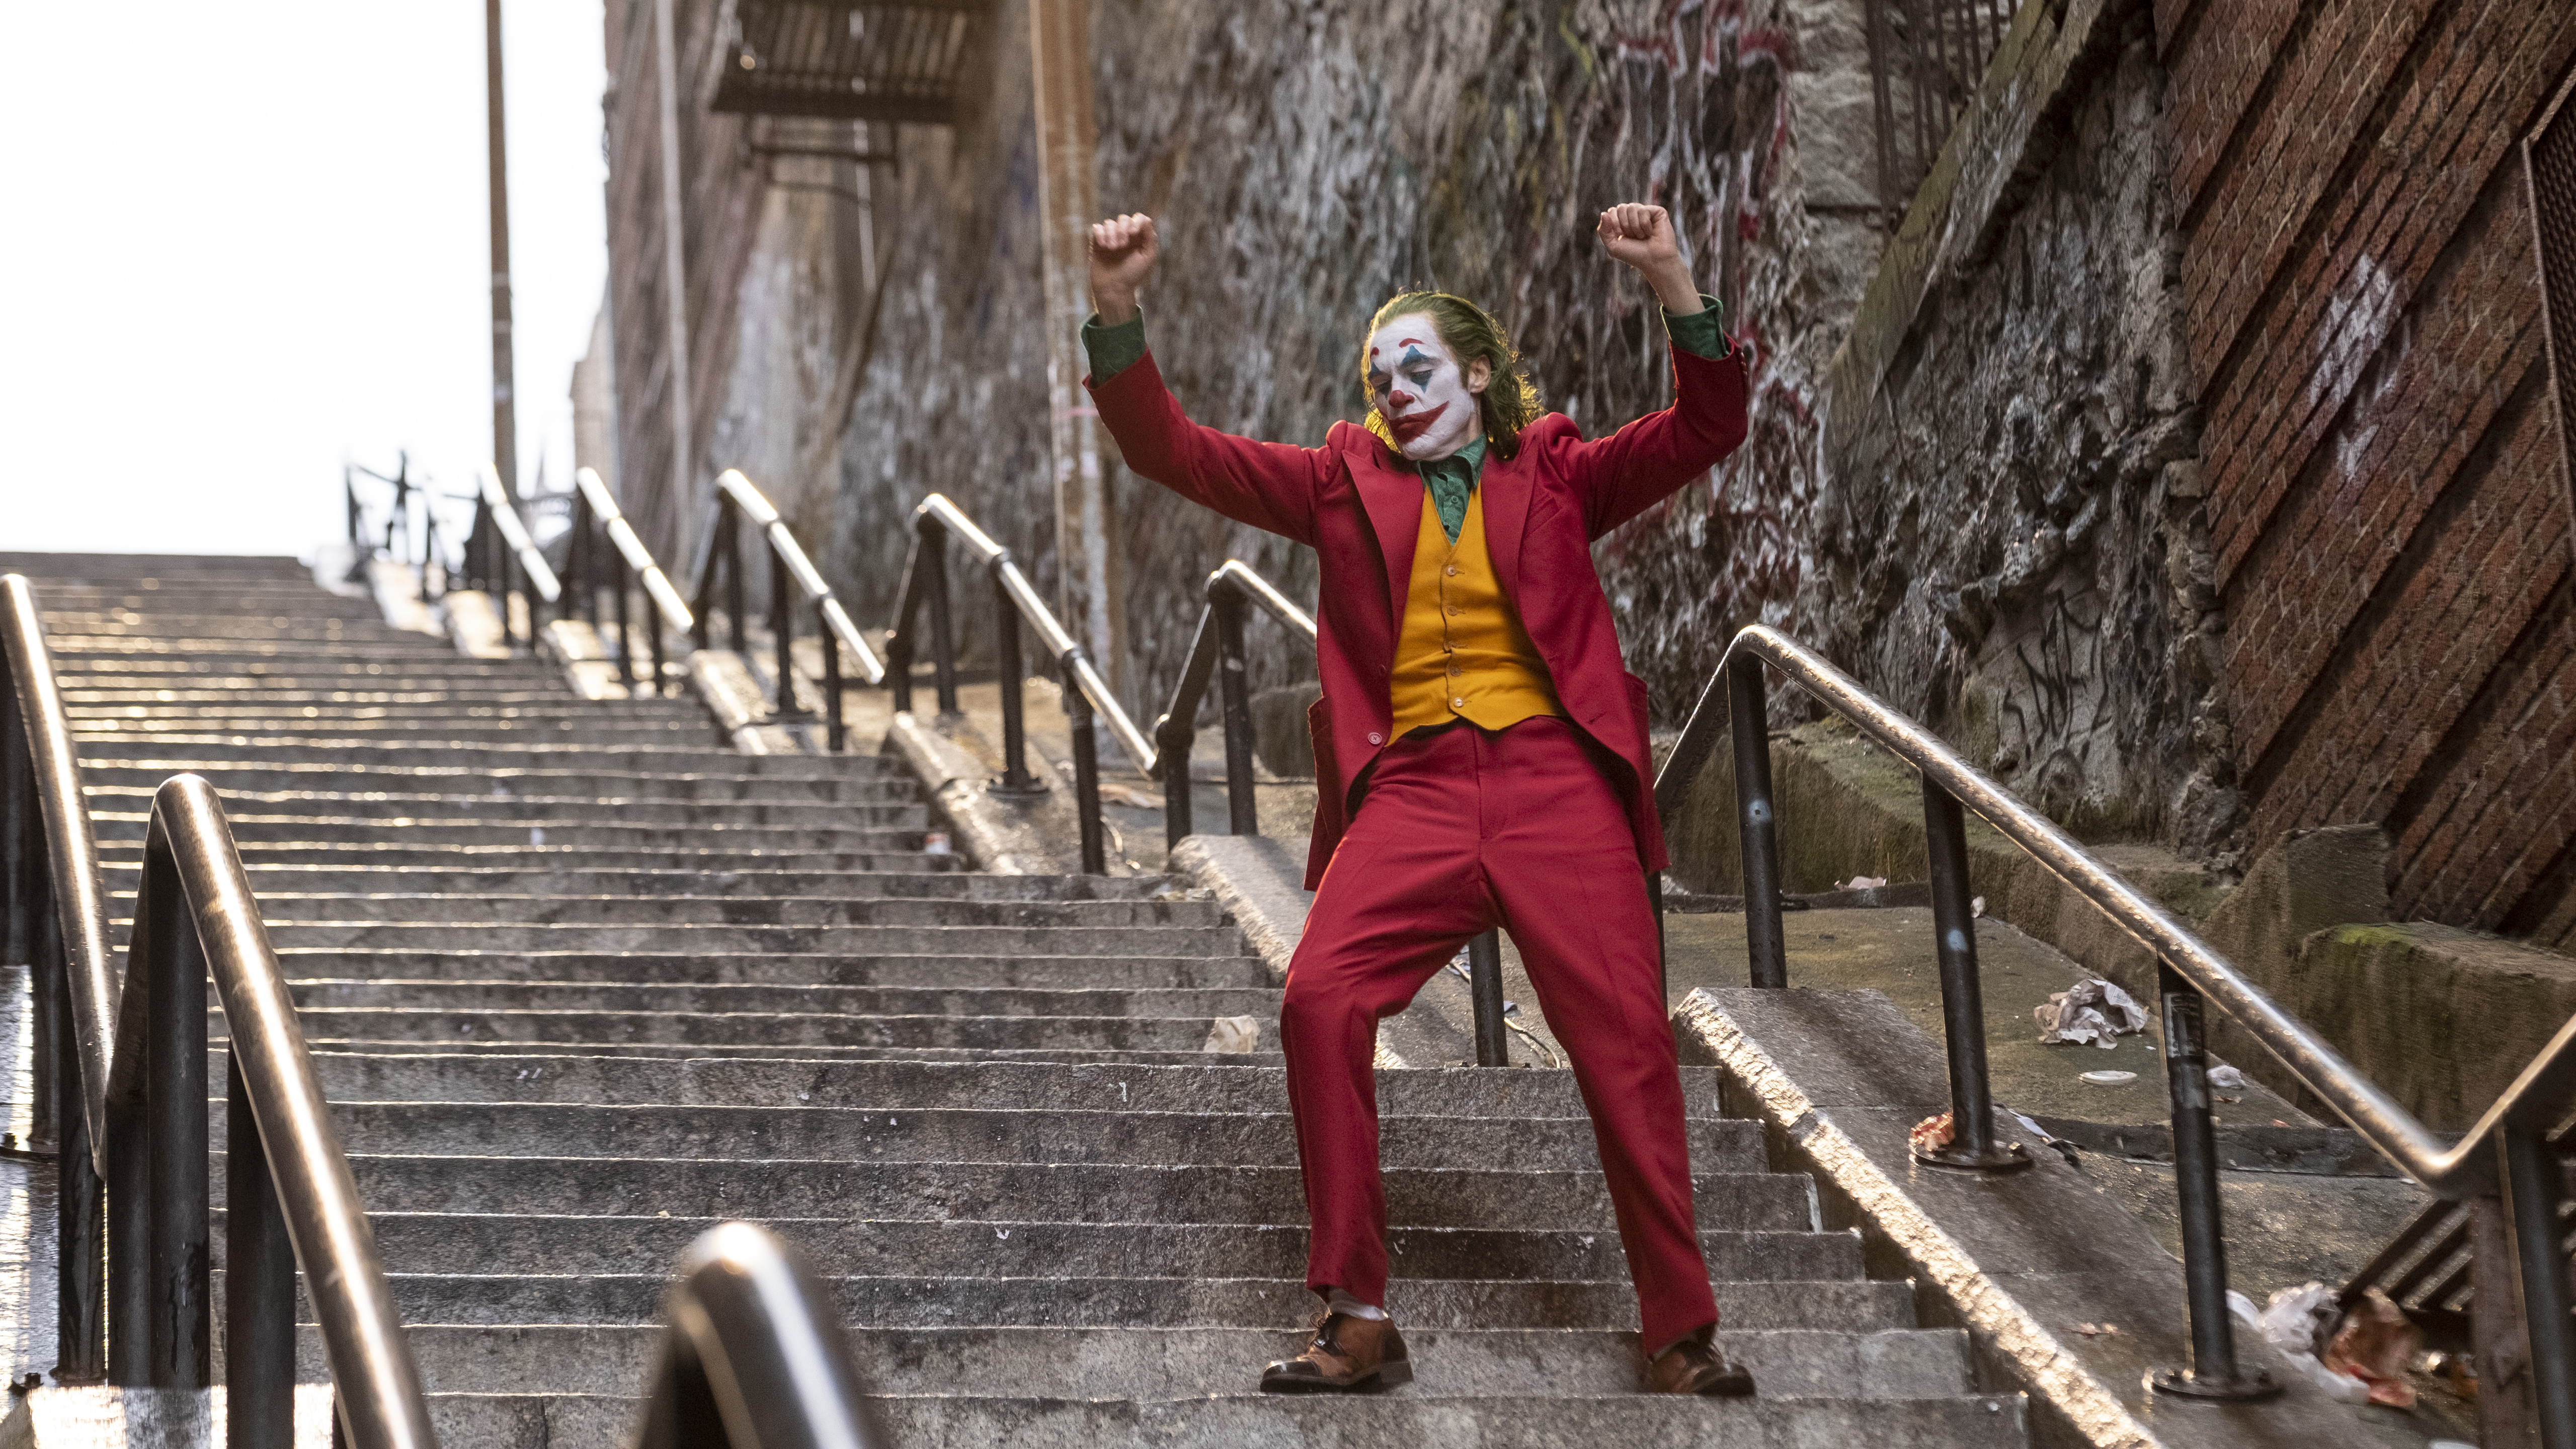 Joker Joaquin Phoenix Dancing On Stairs K K 2K Joker